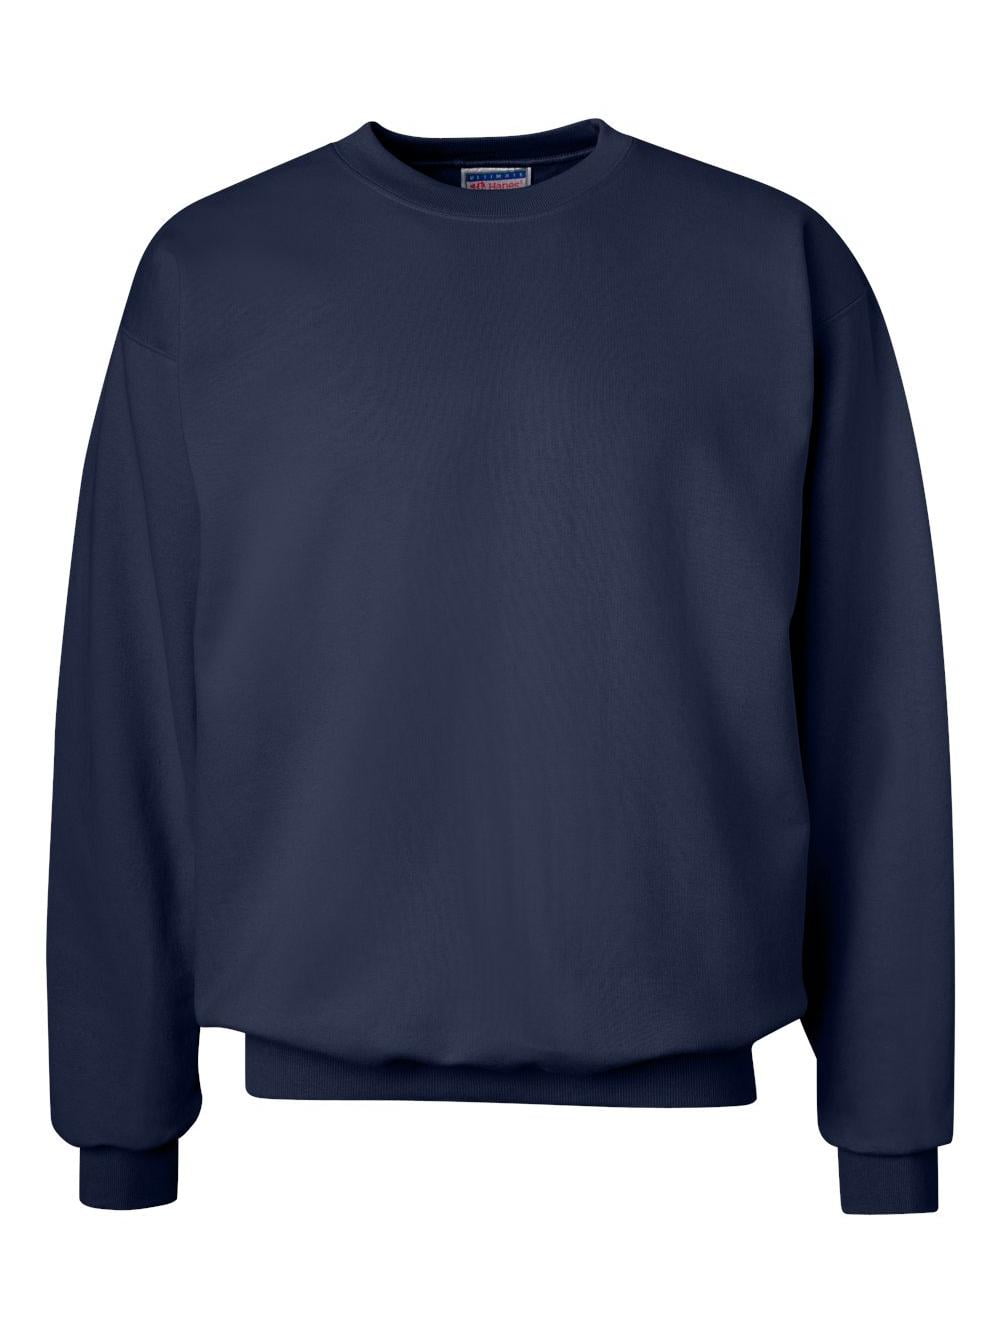 Hanes - Fleece Ultimate Cotton Crewneck Sweatshirt - Walmart.com